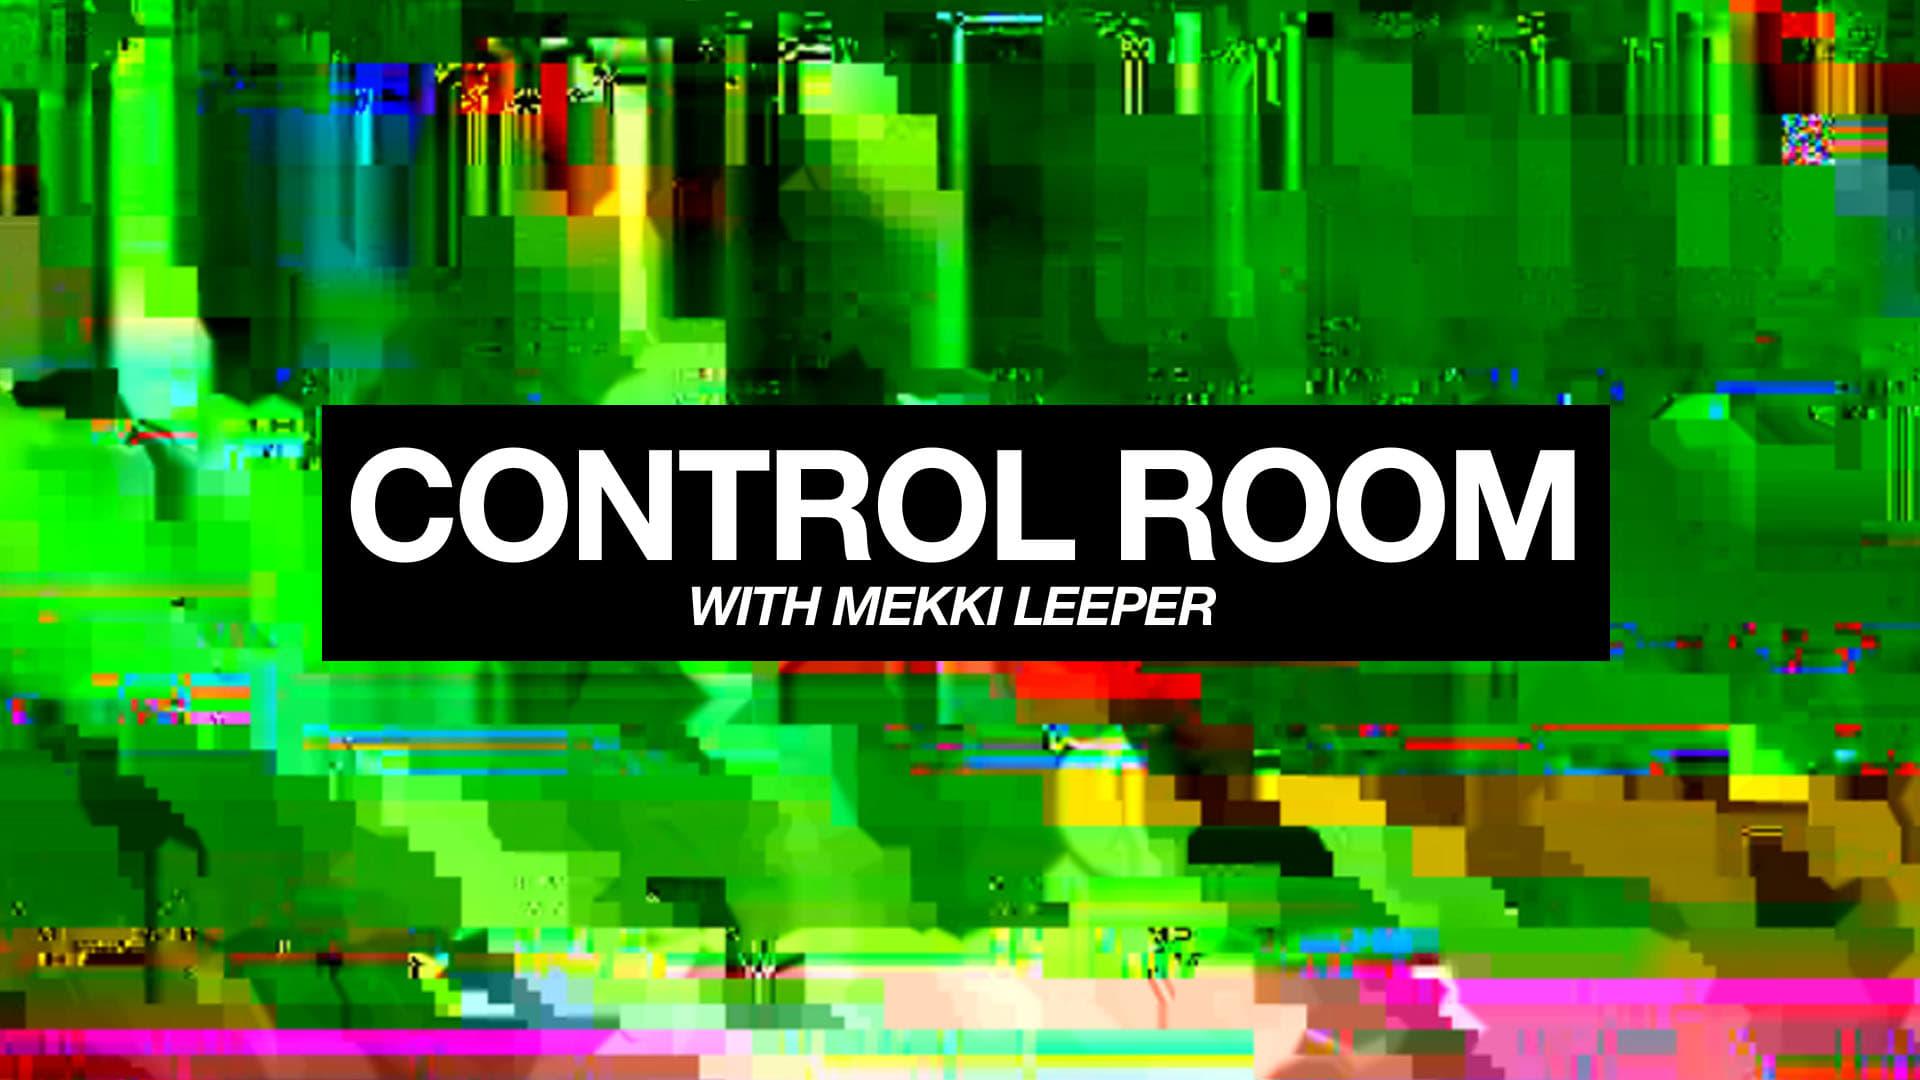 Control Room with Mekki Leeper backdrop